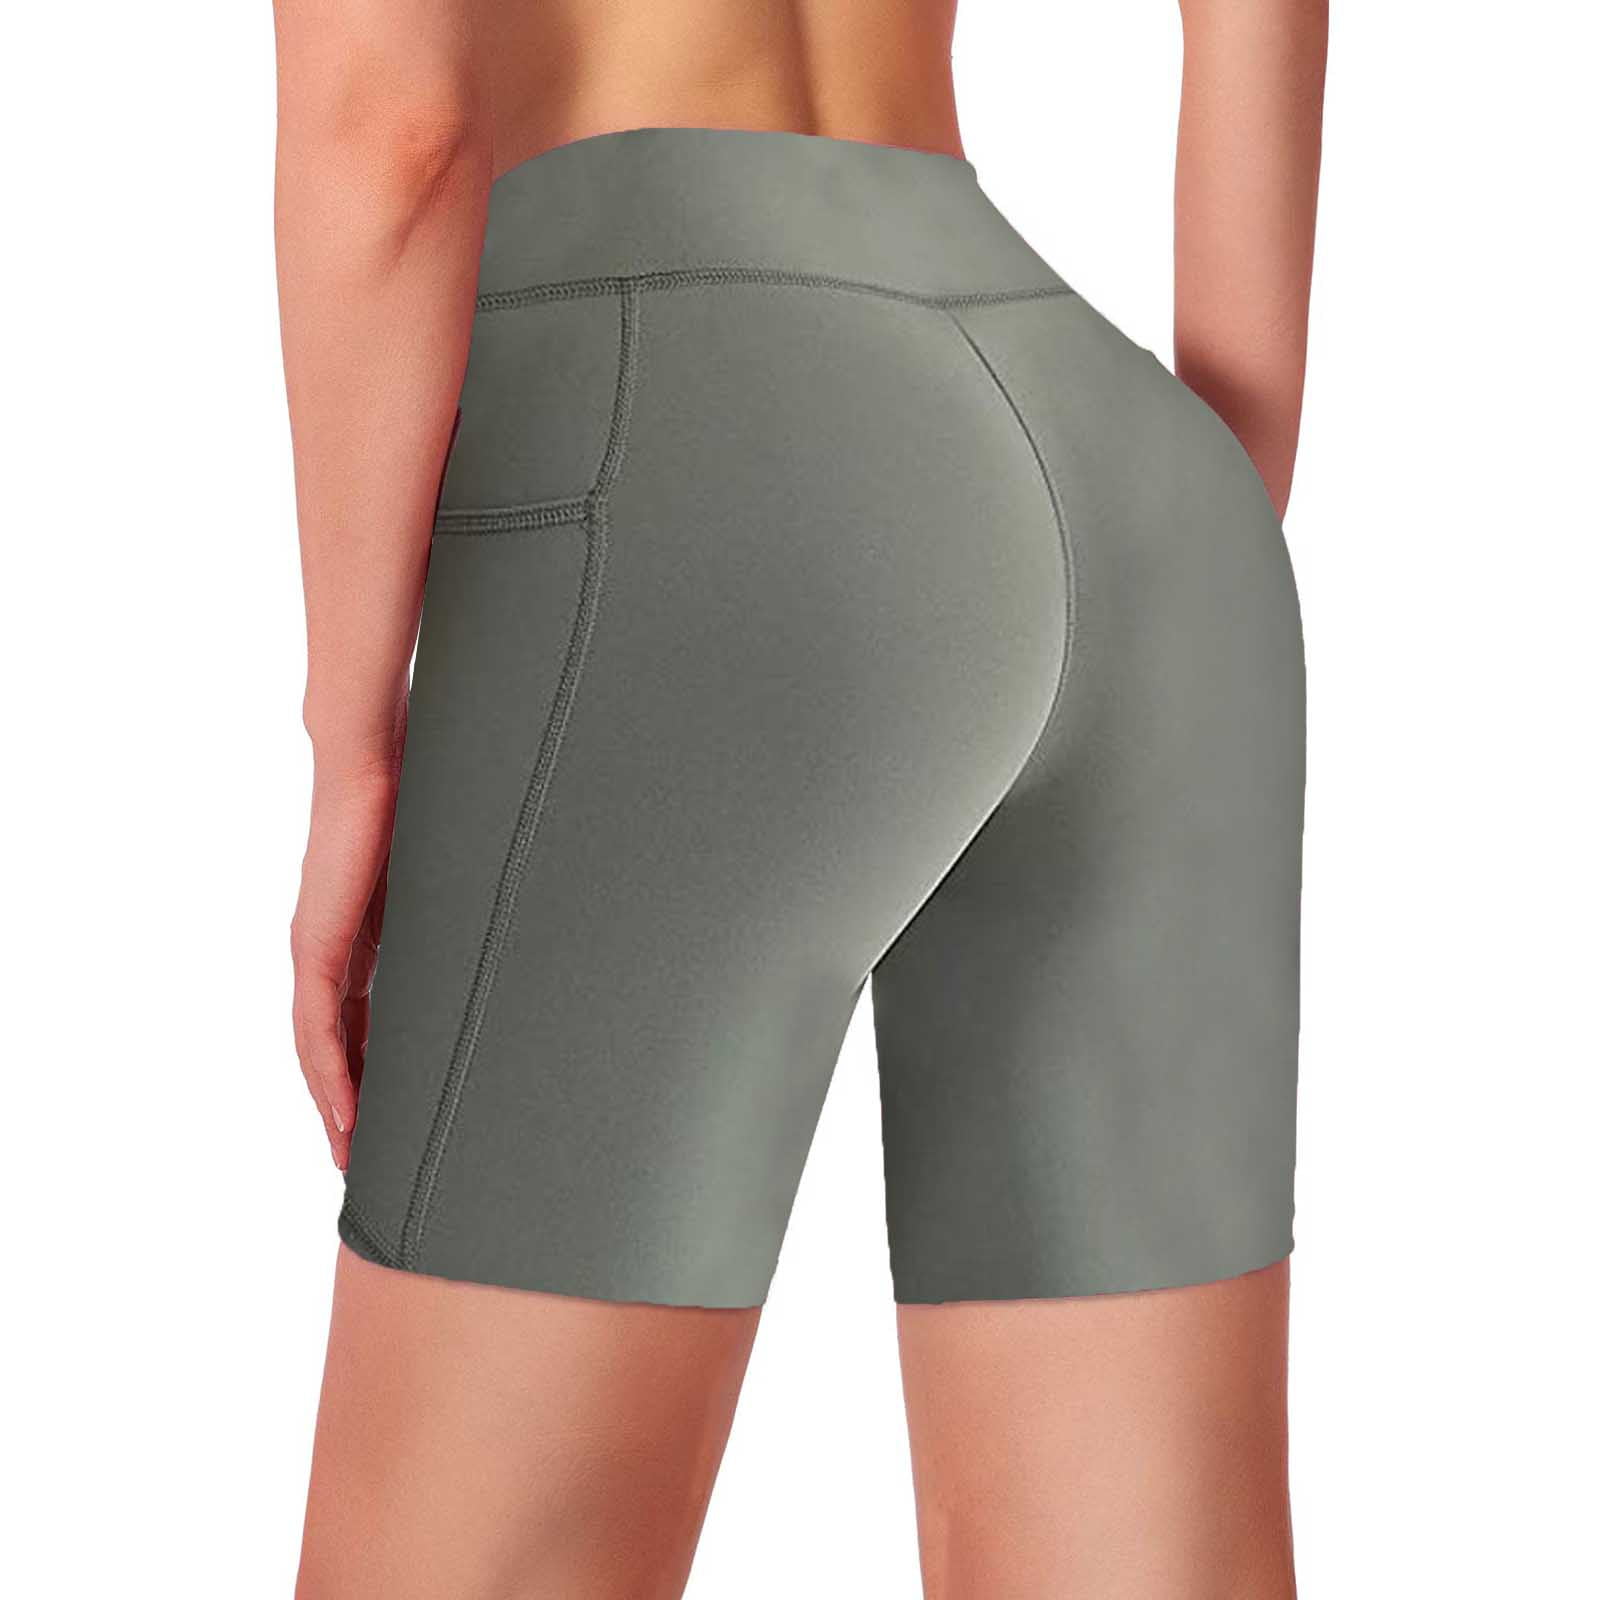 EQWLJWE Yoga Pants for Women High Waist Biker Shorts Workout Yoga